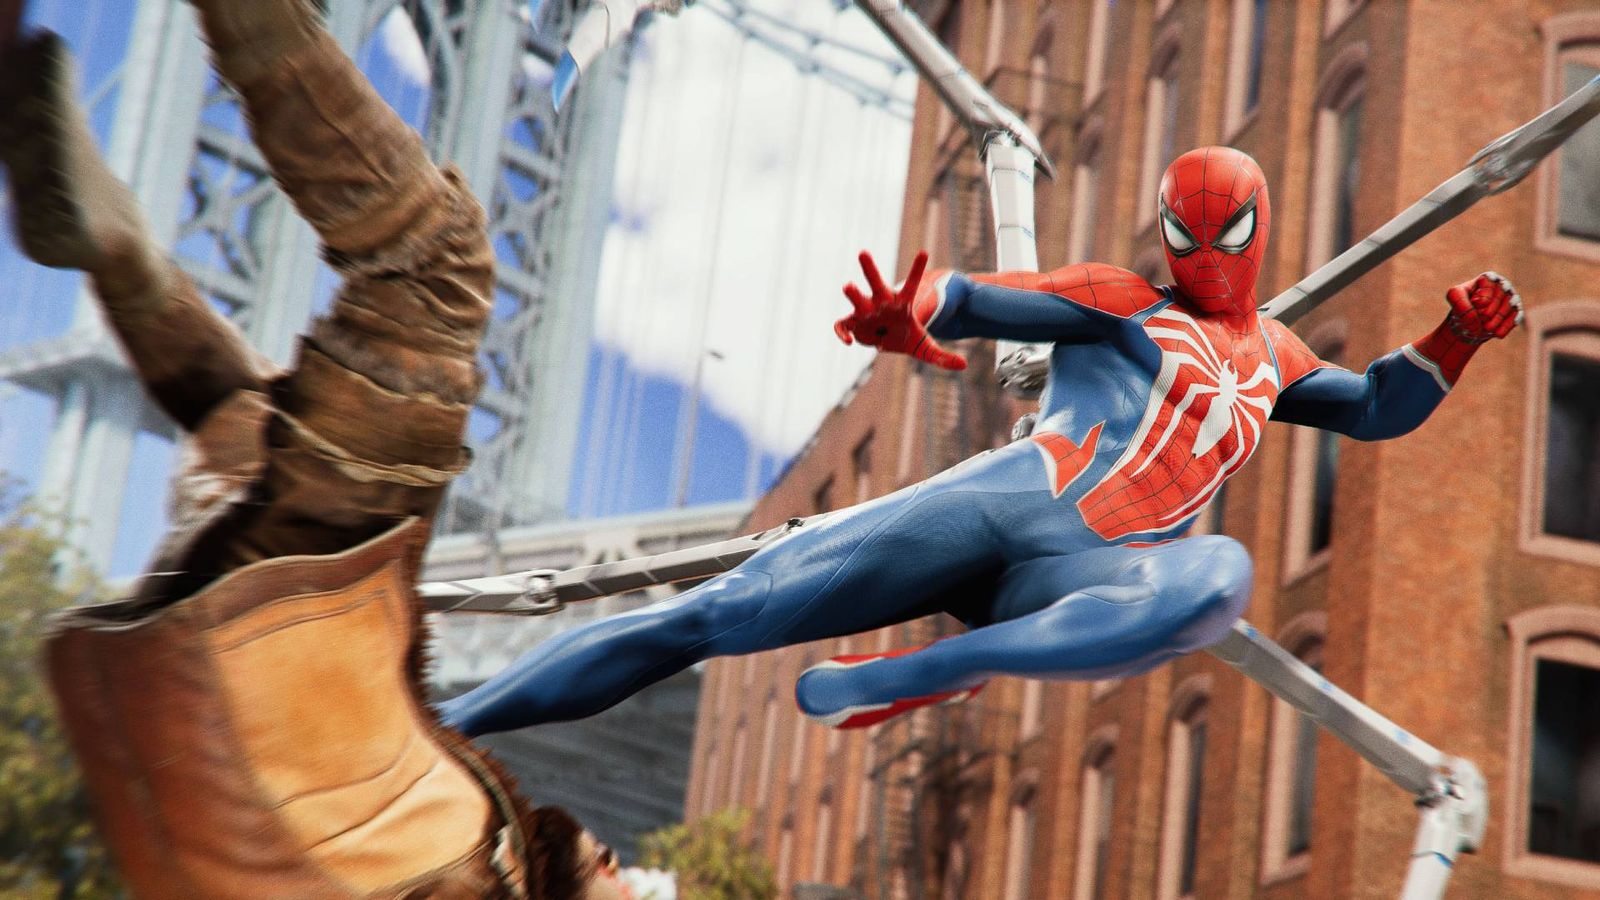 Spider-Man punching an enemy in Spider-Man 2.